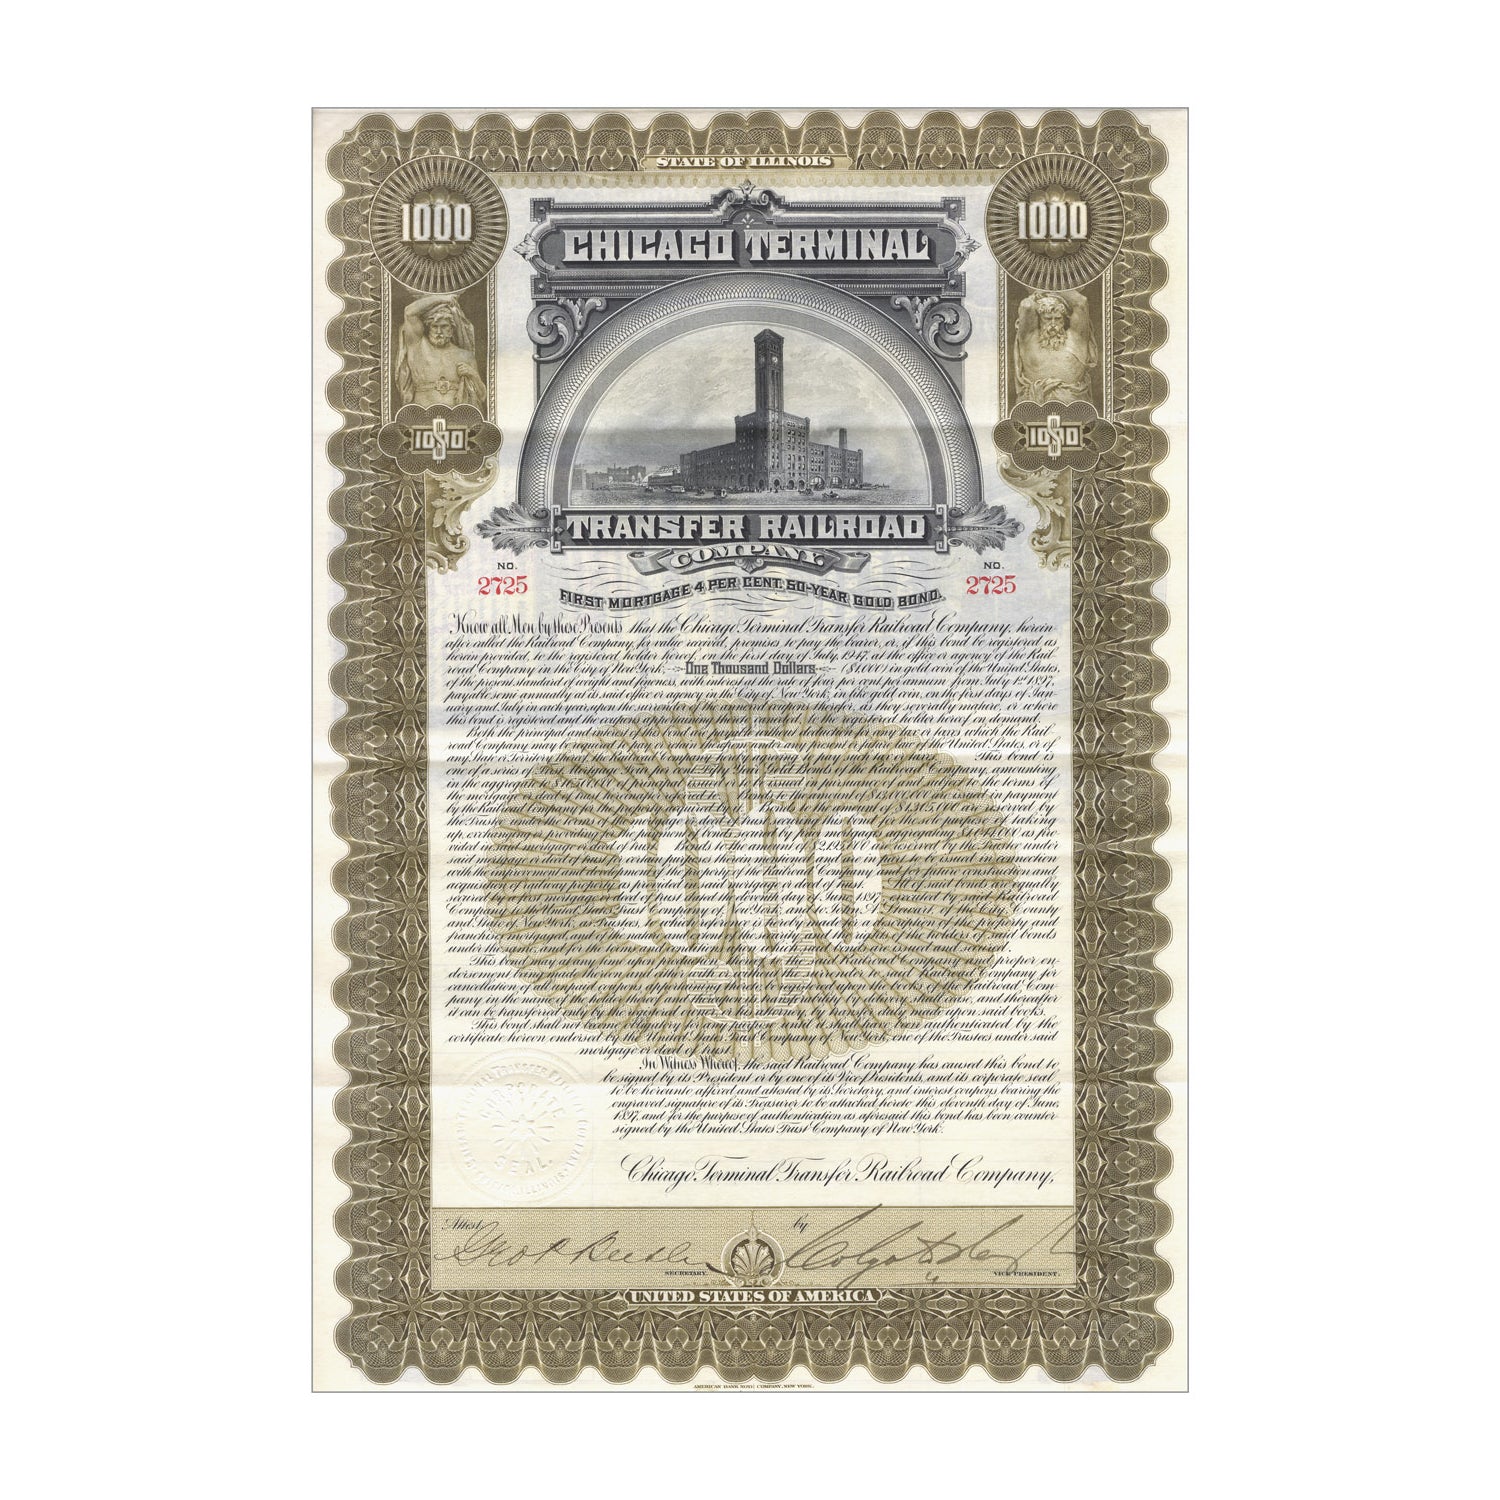 Chicago Terminal Transfer Railroad Bond Certificate (Circa. 1897)